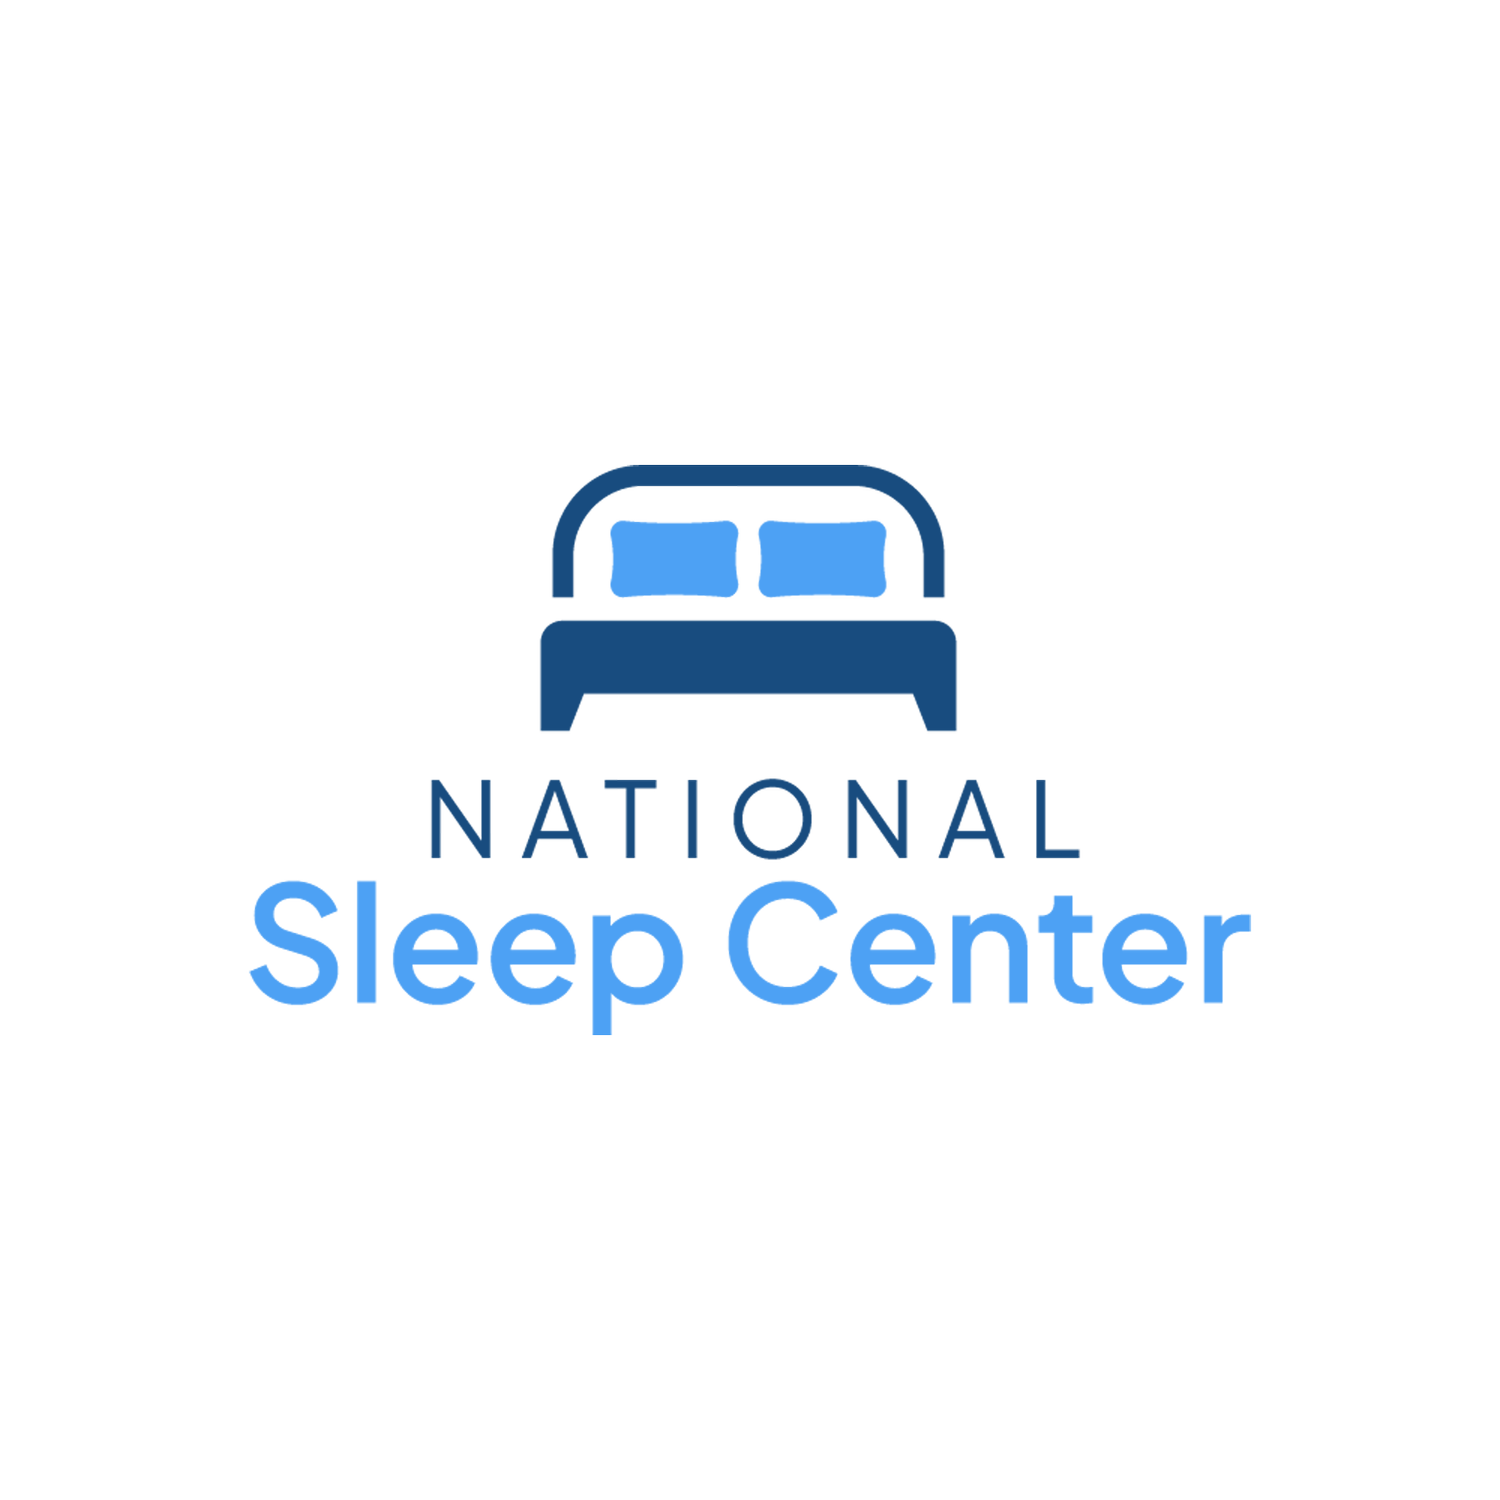 National Sleep Center